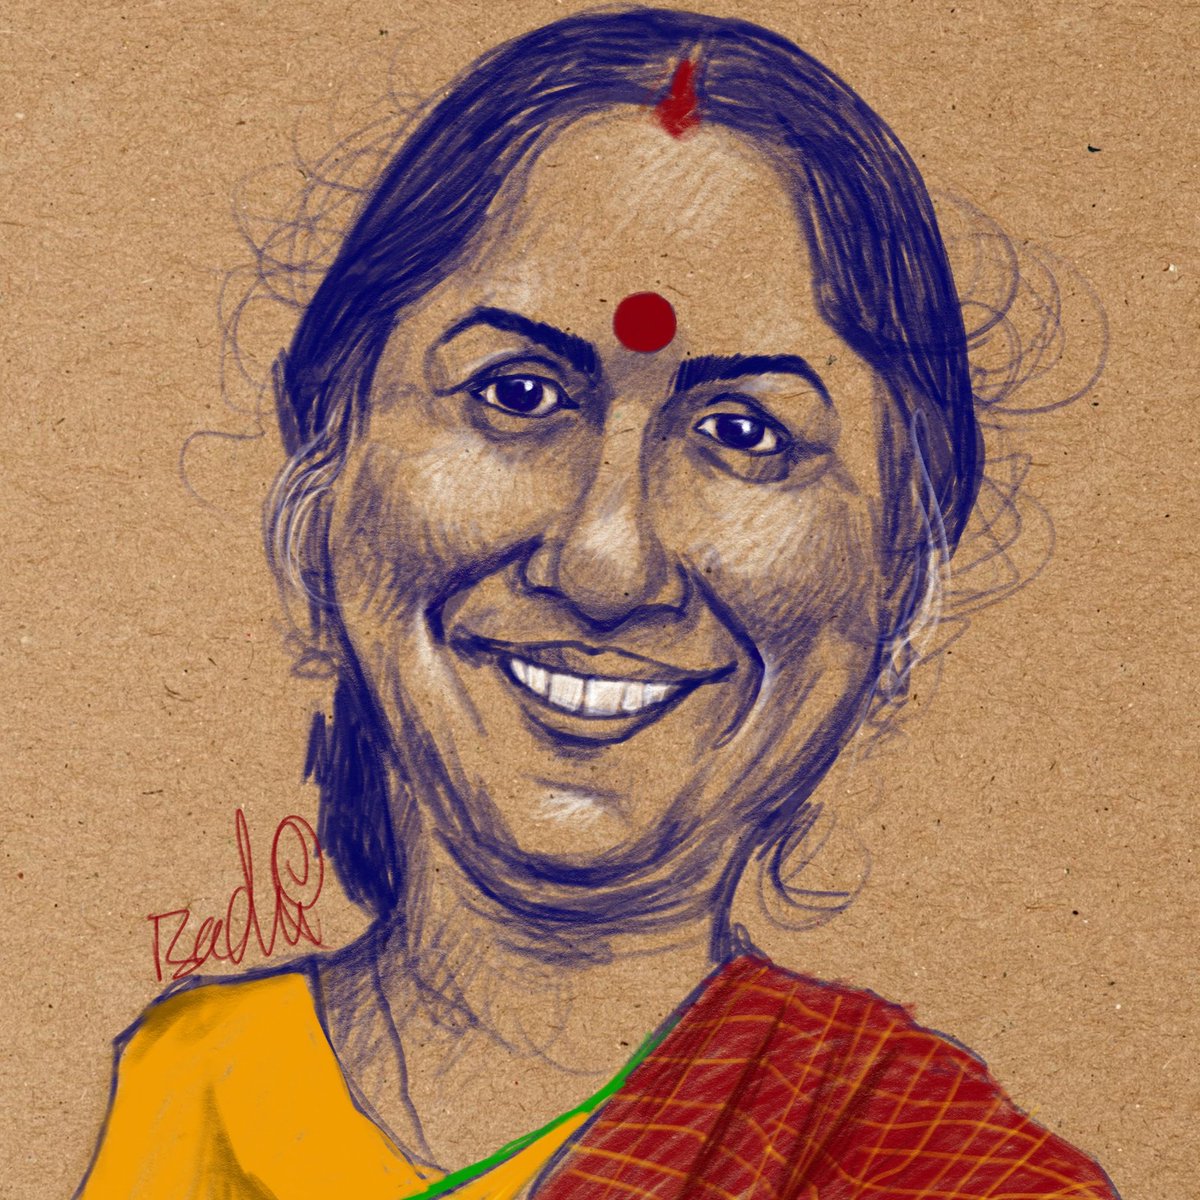 Caricature పుట్టినరోజు శుభాకాంక్షలు రేవతిగారూ #caricaturesbybadri #caricature #actress #indianfilm #రేవతి #Revati #openforcommissions #commissionsopen #art #digitalart